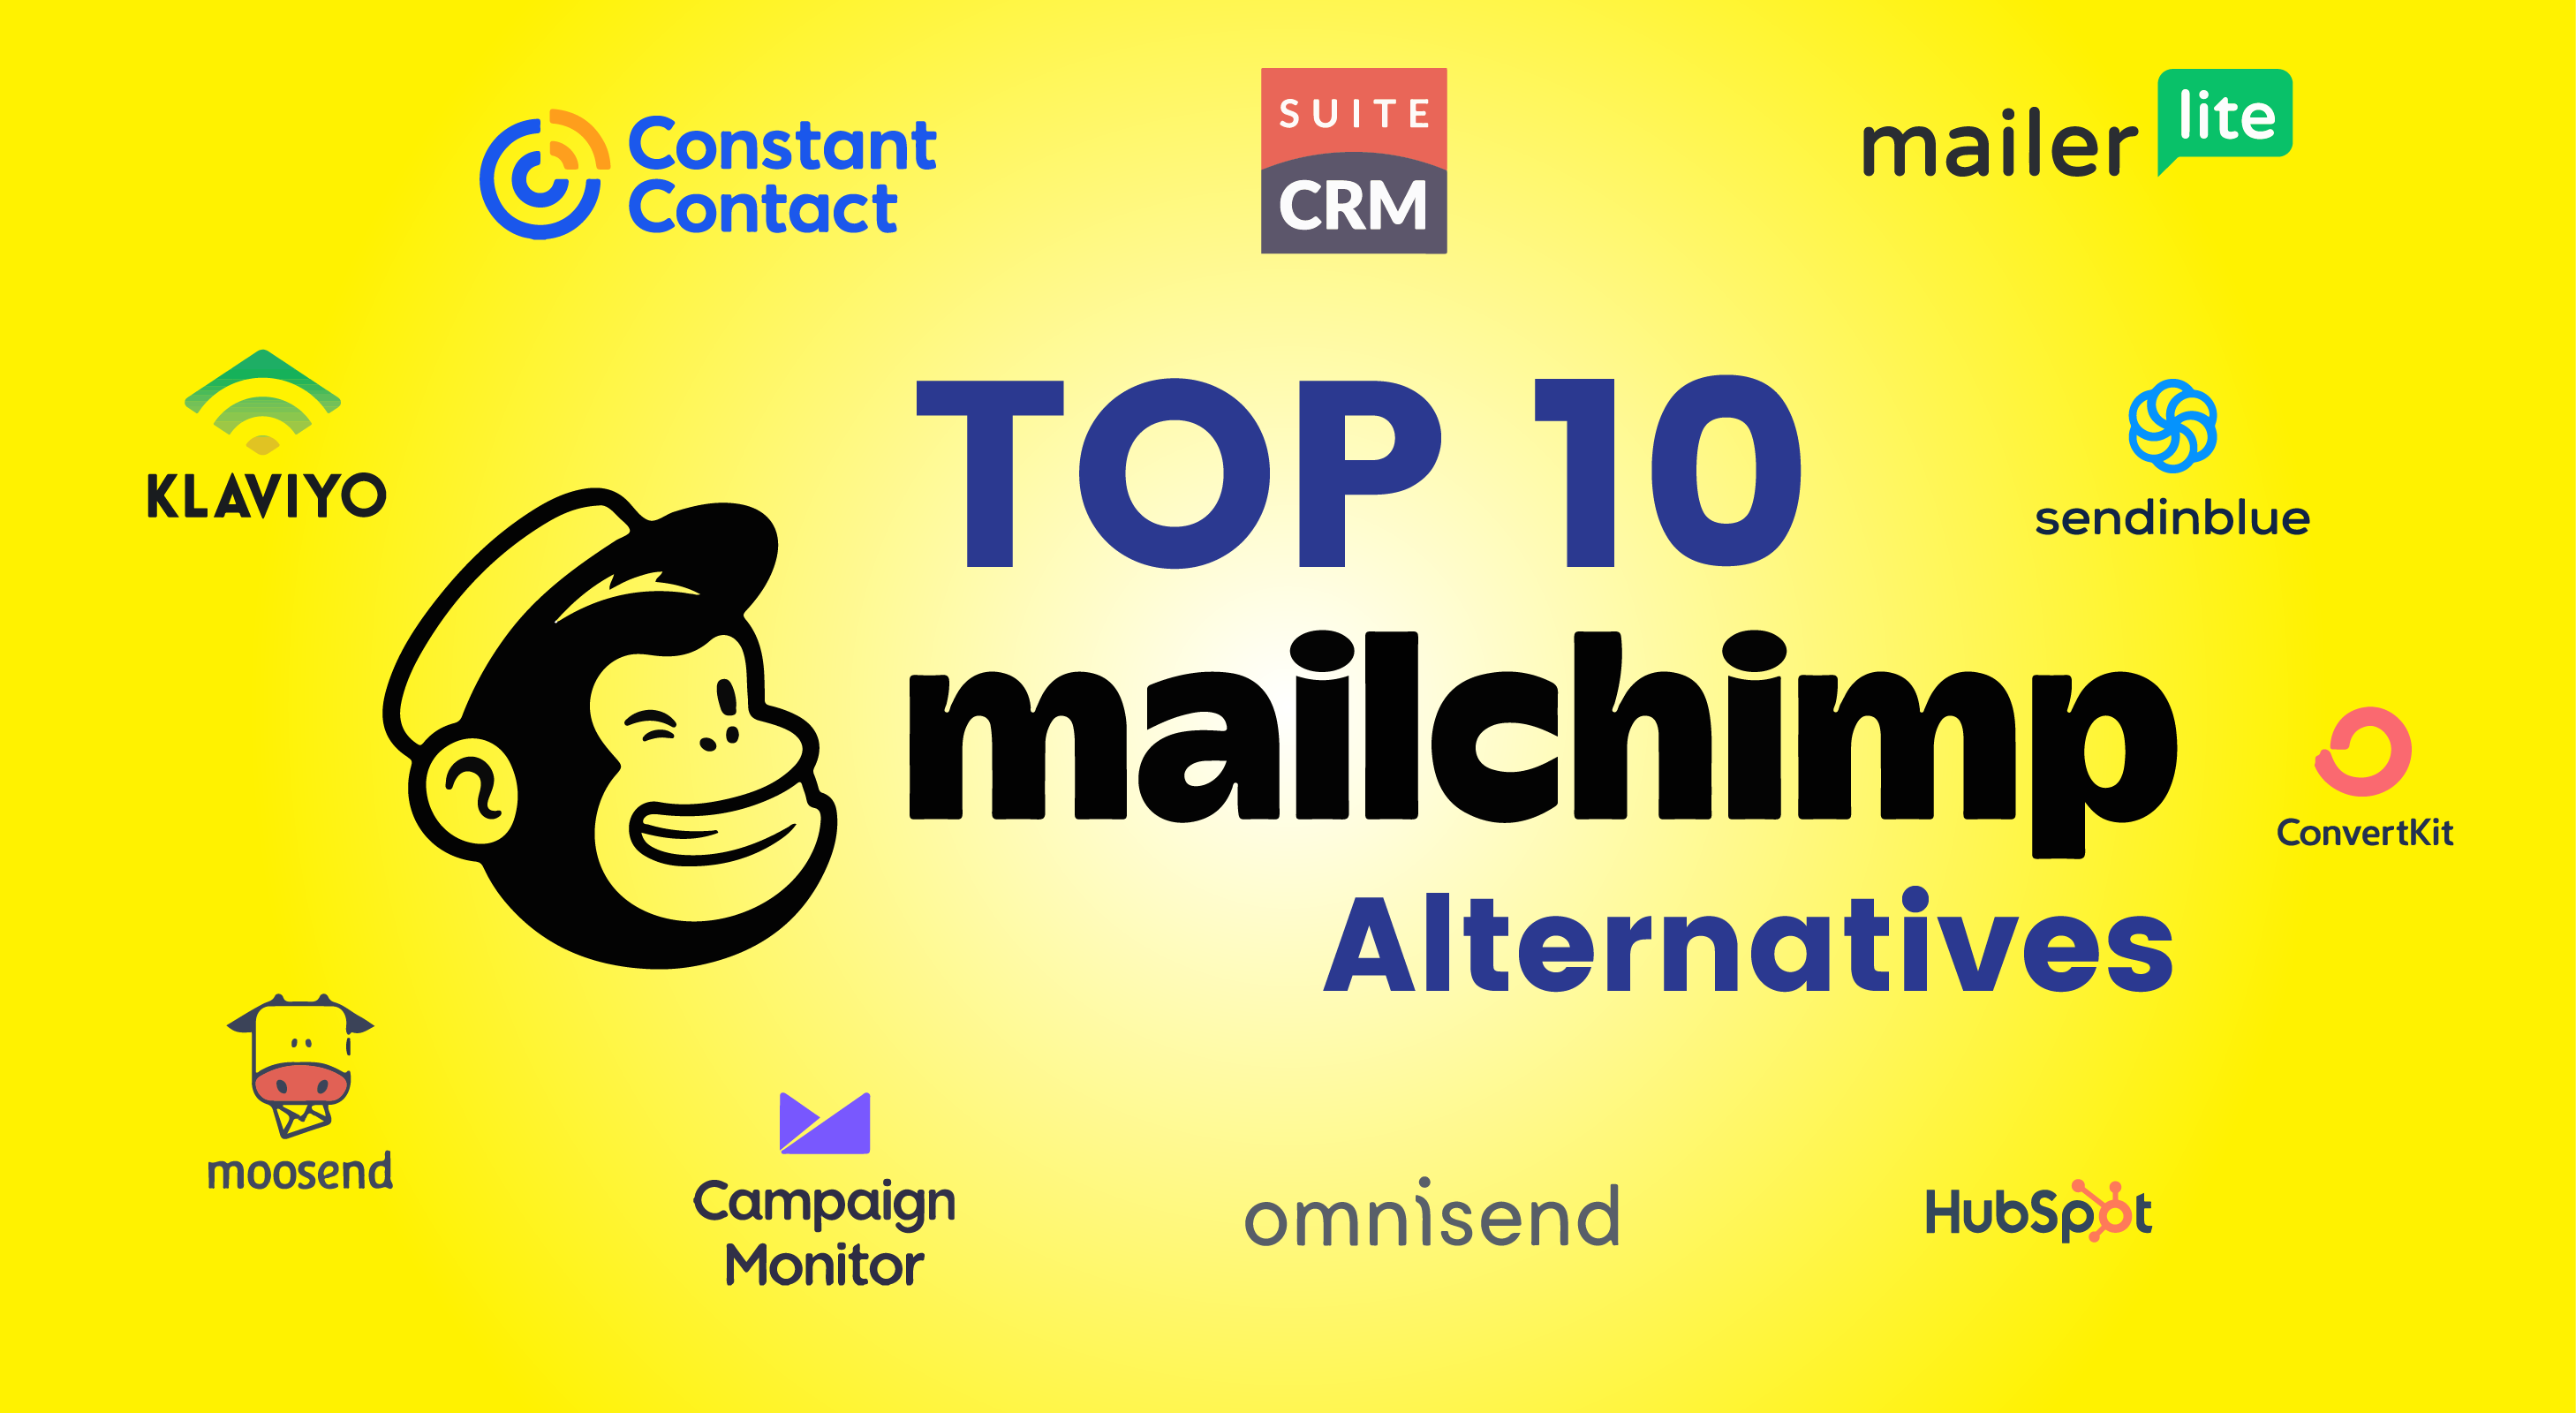 Top 10 Mailchimp Alternatives | Price, Pros, Cons, Features, Reviews